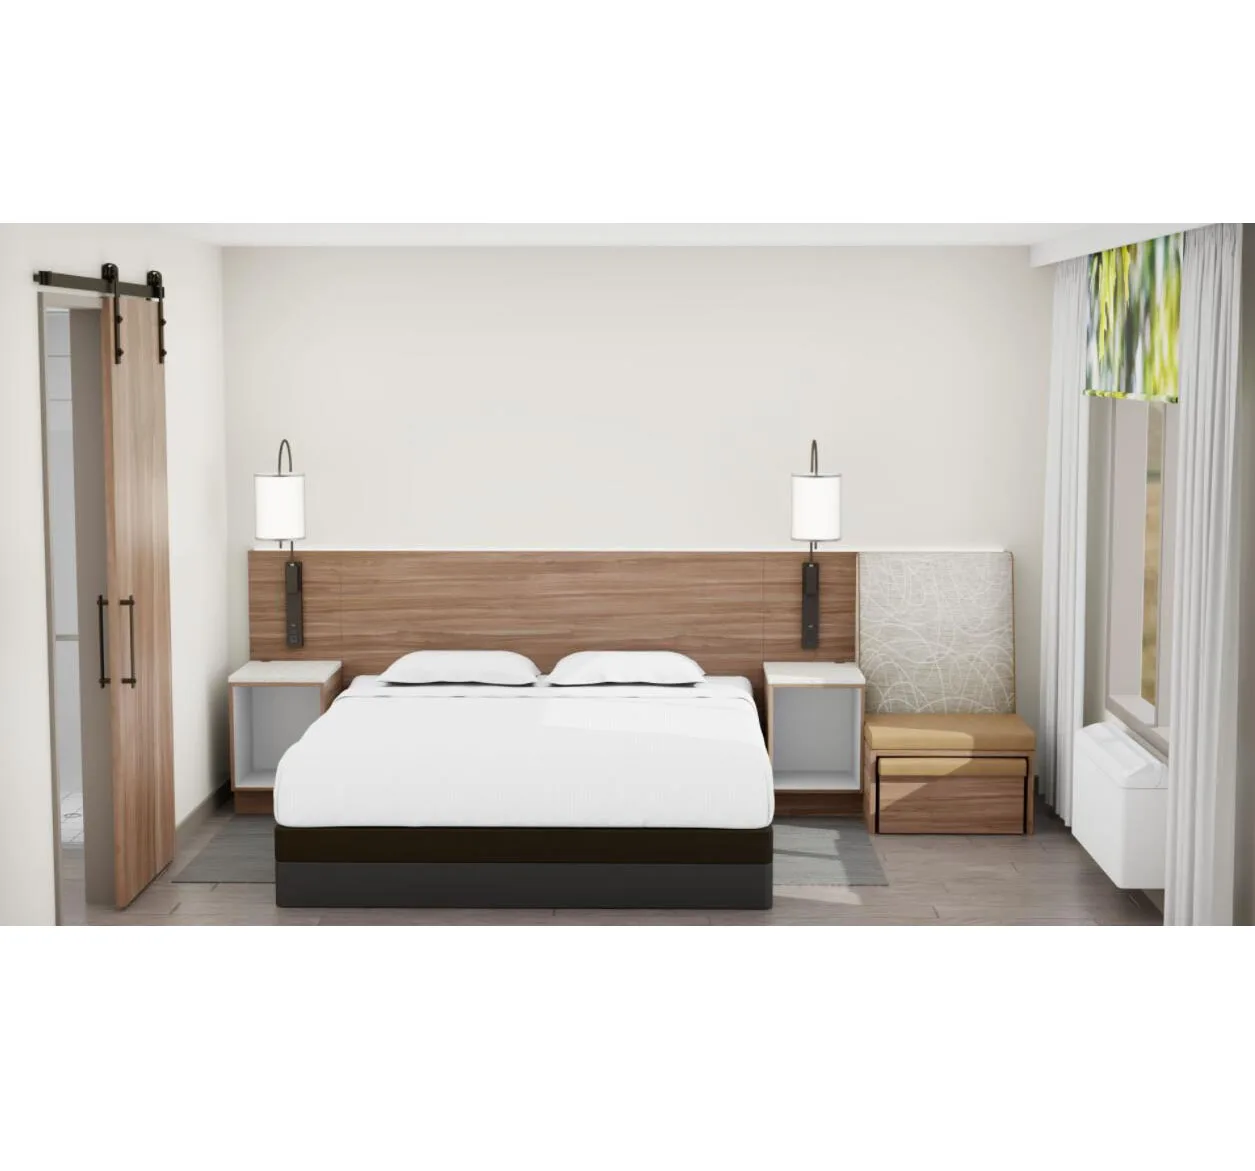 GRT6230 Wyndham Garden Hotel Furniture Modern Wooden Beds Cheap Furniture Hotel King Bedroom Sets